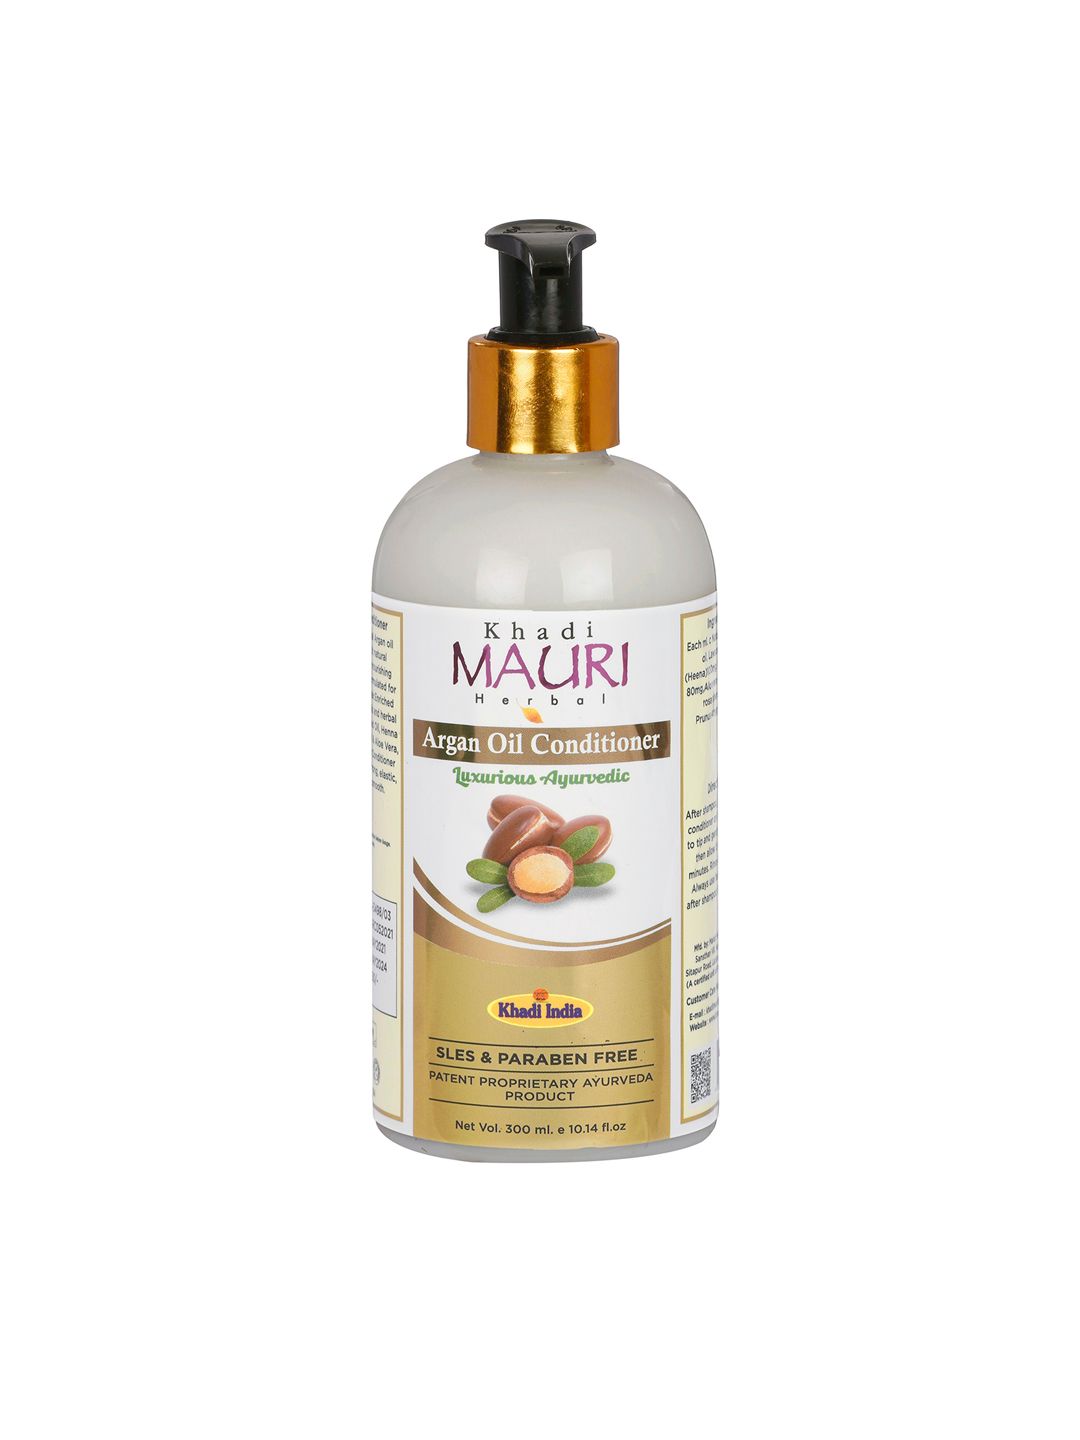 Khadi Mauri Herbal Argan Oil Luxurious Ayurvedic Hair Conditioner - 300 ml Price in India